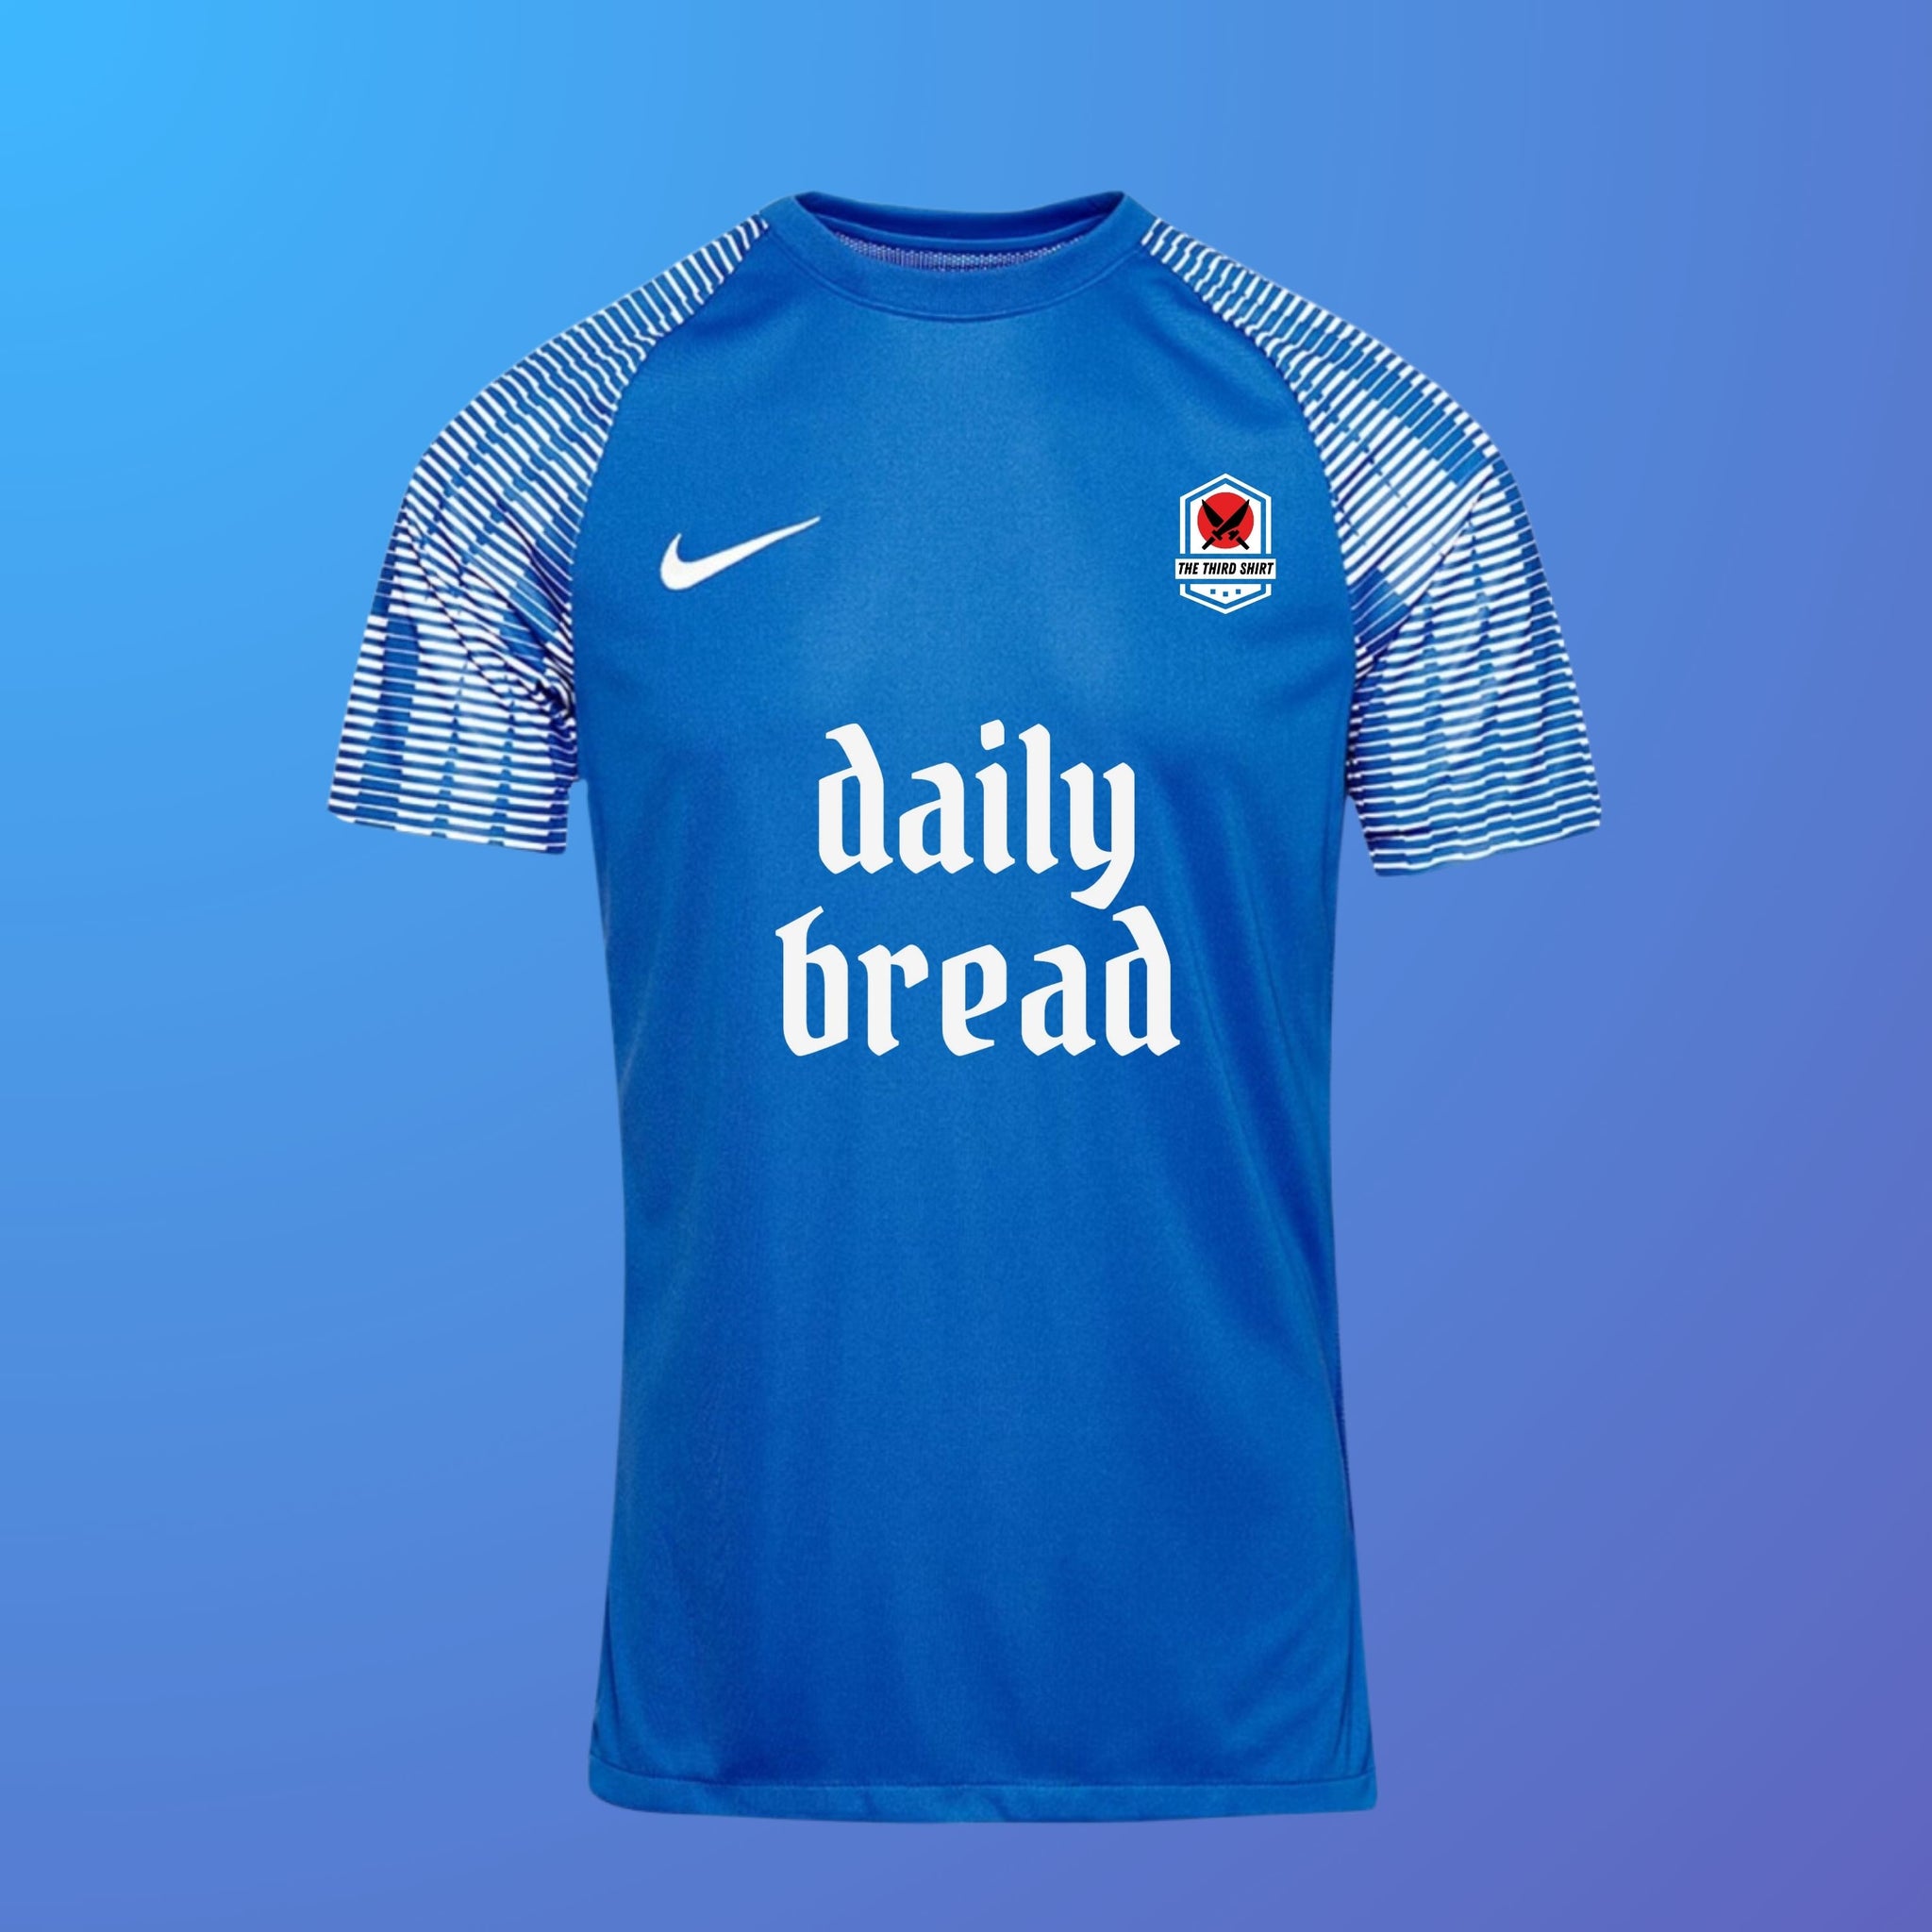 Daily Bread - Royal Blue - Nike Dri-FIT Academy Shirt